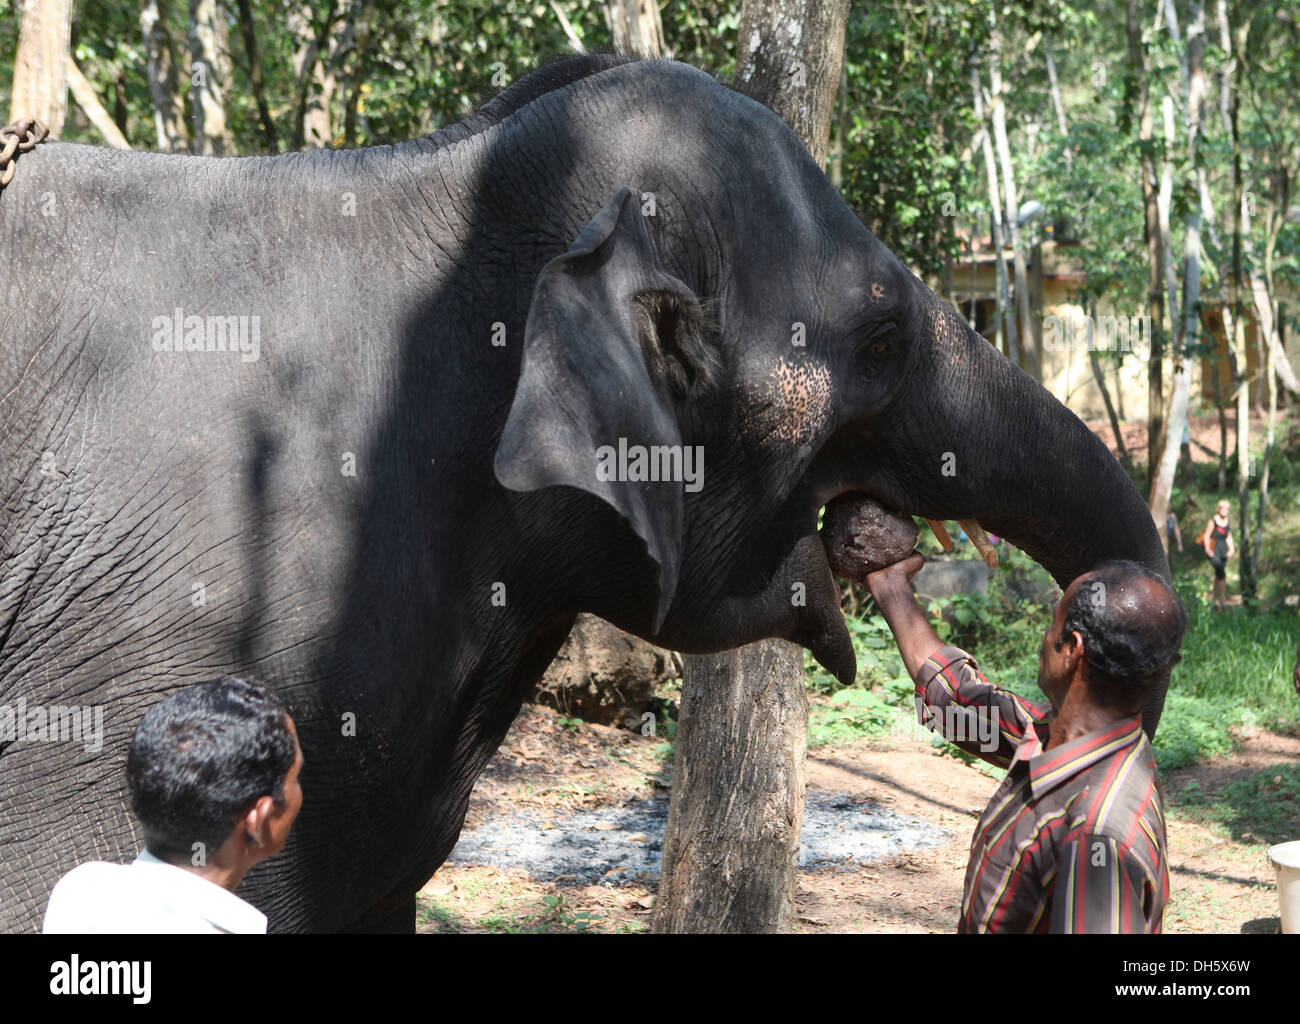 mahout-feeding-an-asian-elephant-elephas-maximus-kappukadu-elephant-DH5X6W.jpg